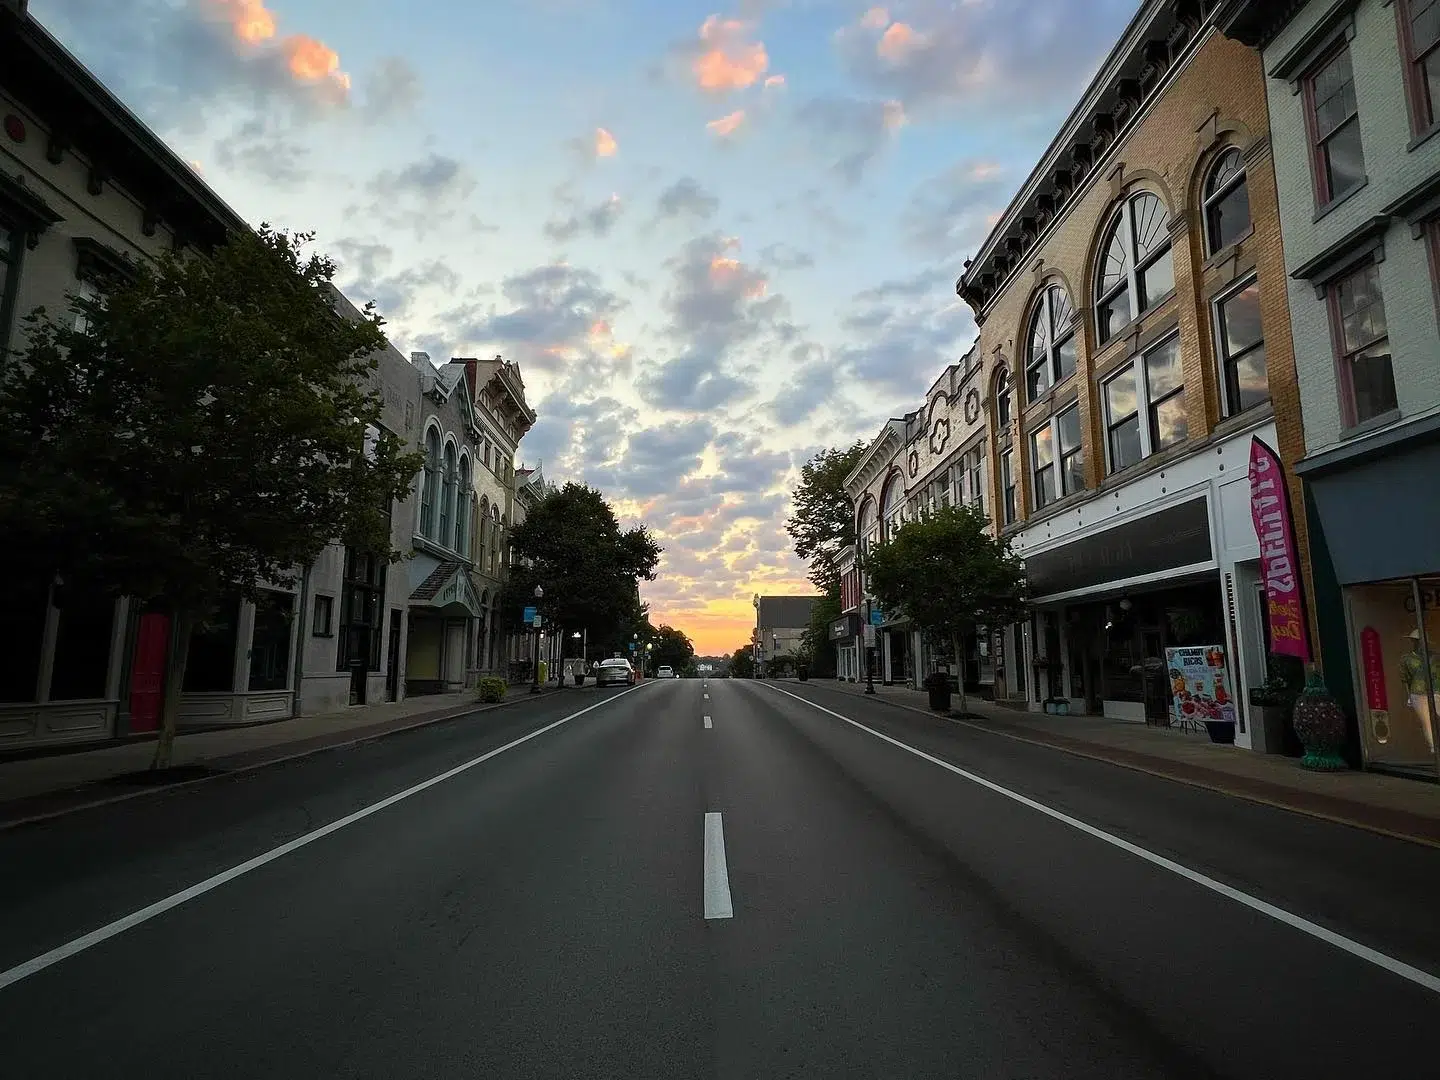 Sunset over quiet small town main street in Shelbyville, Kentucky